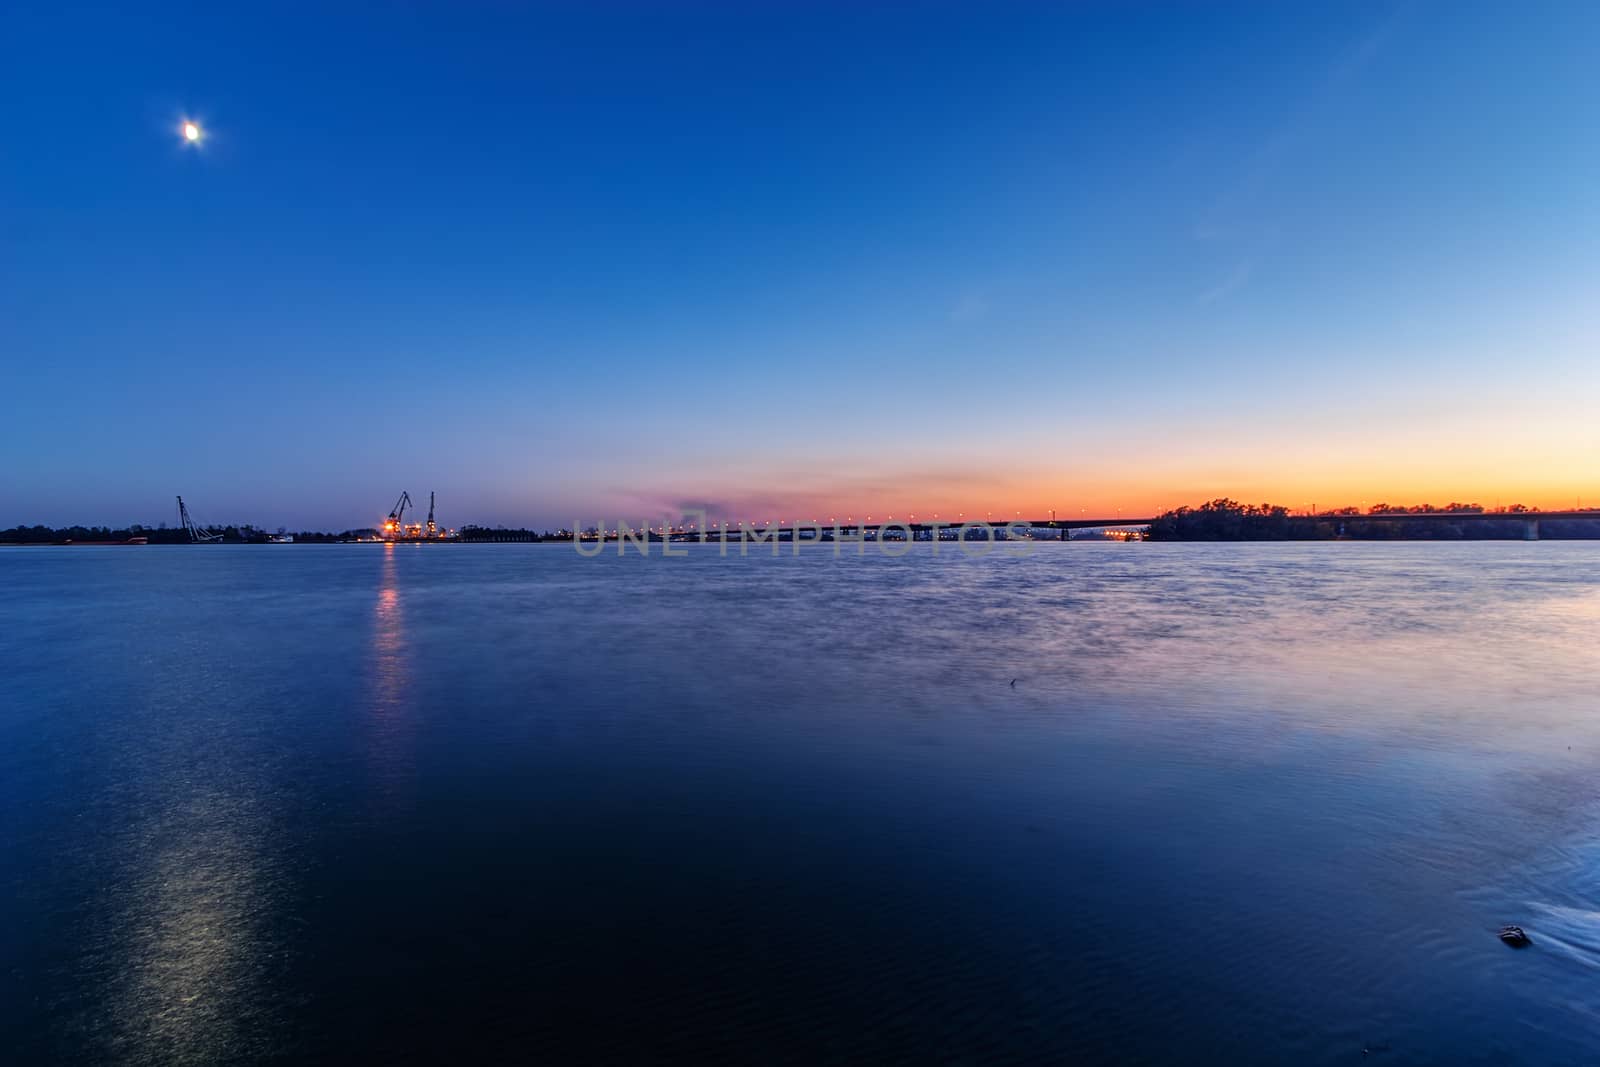 Steel bridge across river at night by vladimirnenezic